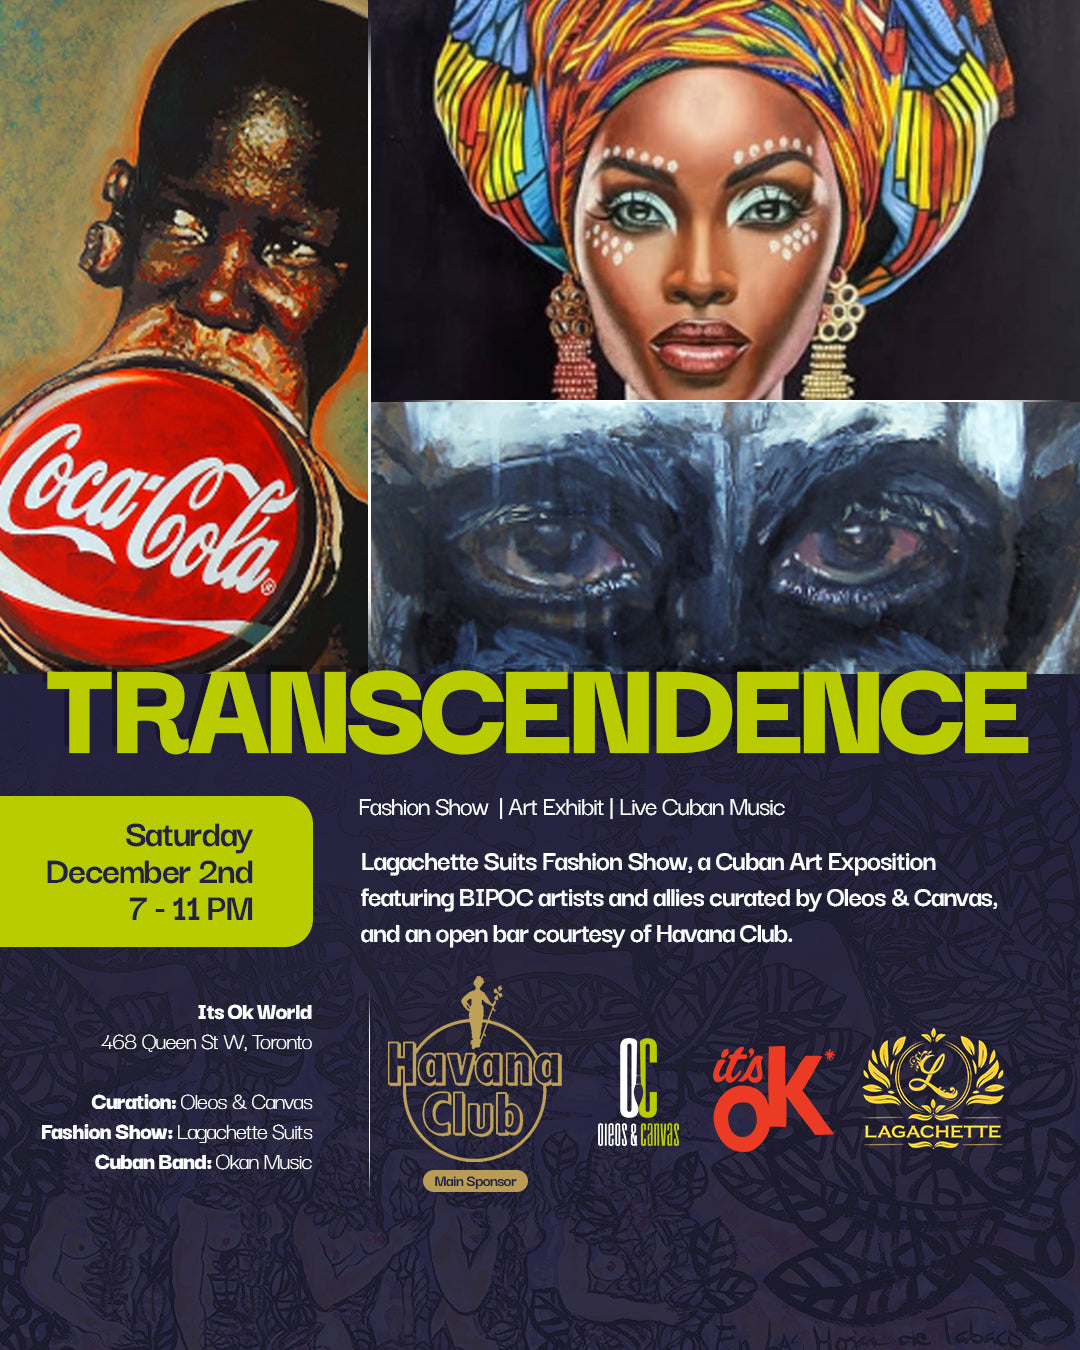 Transcendence, an Afro Cuban Art + Fashion Show